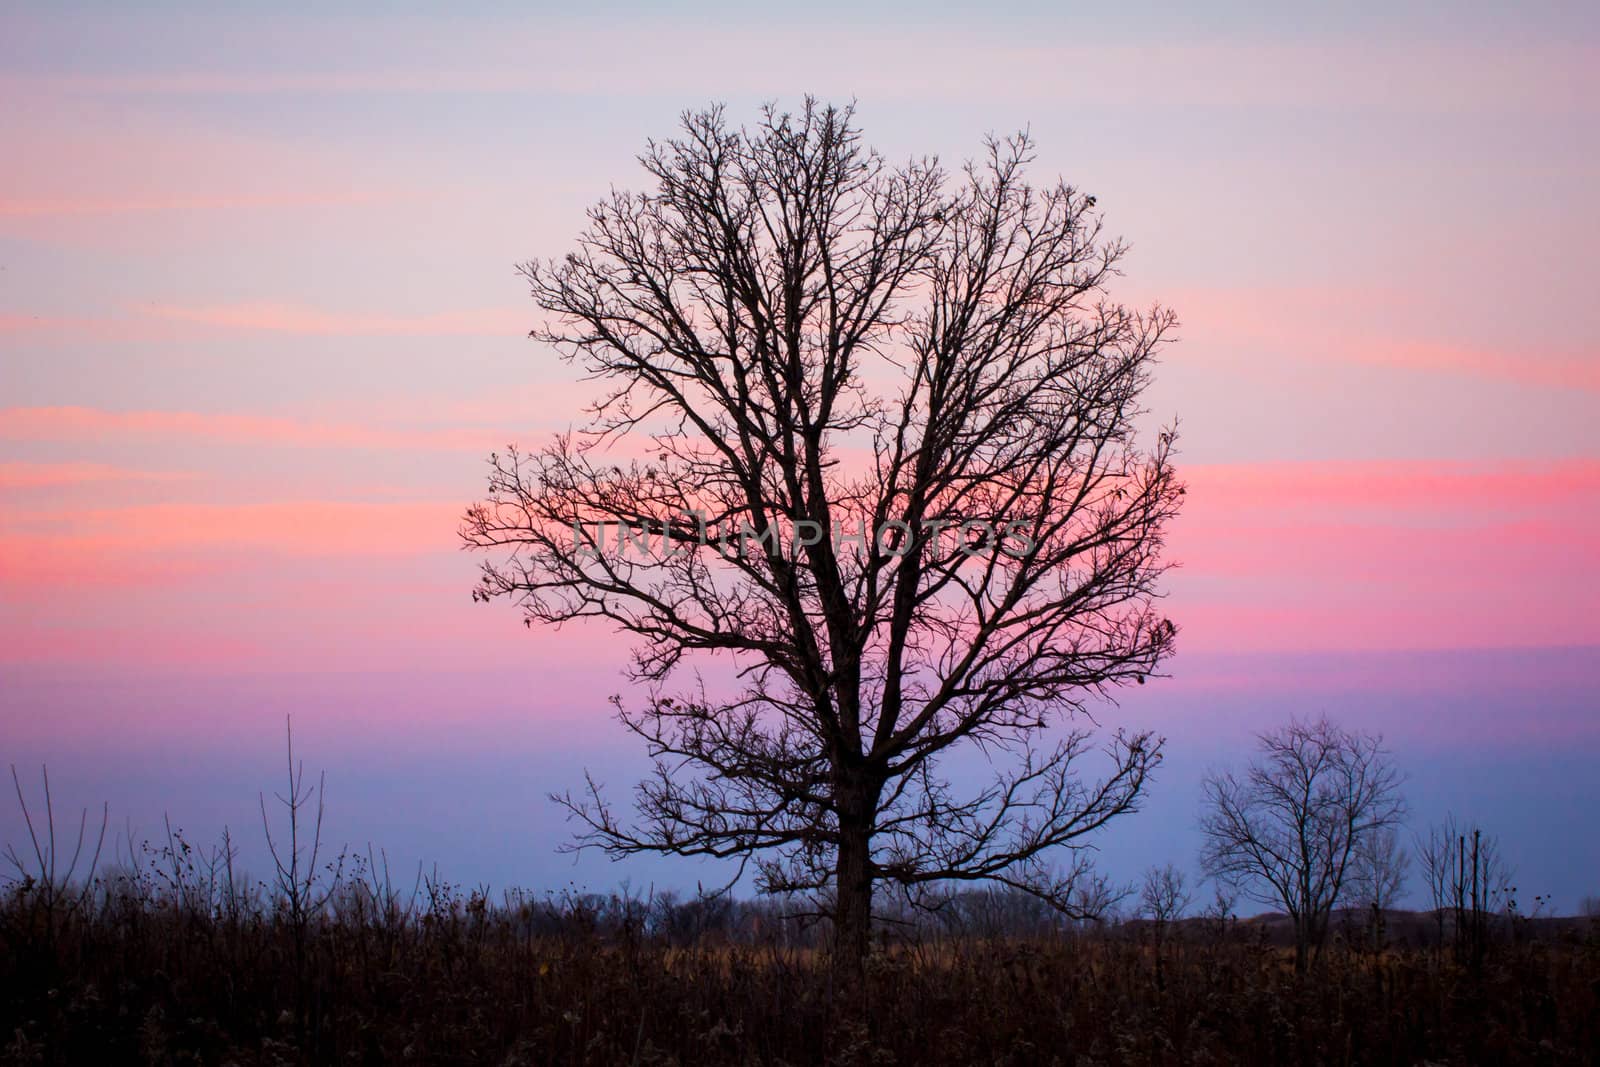 Sunset Through the Barren Trees by wolterk